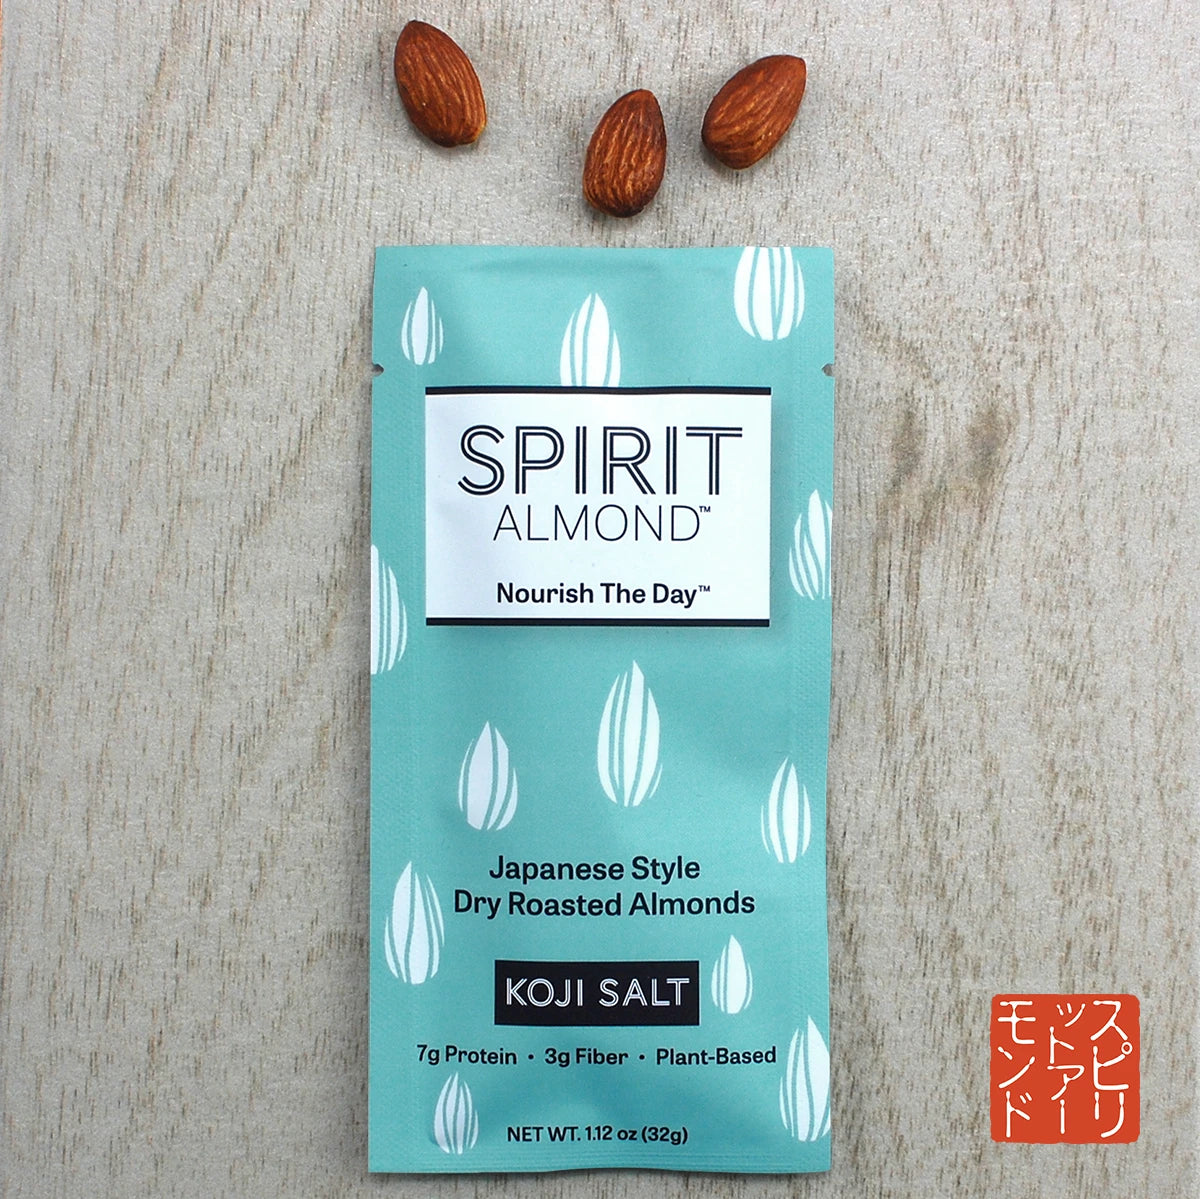 Package of SPIRIT Almond Koji Salt flavor, with a few almonds displayed